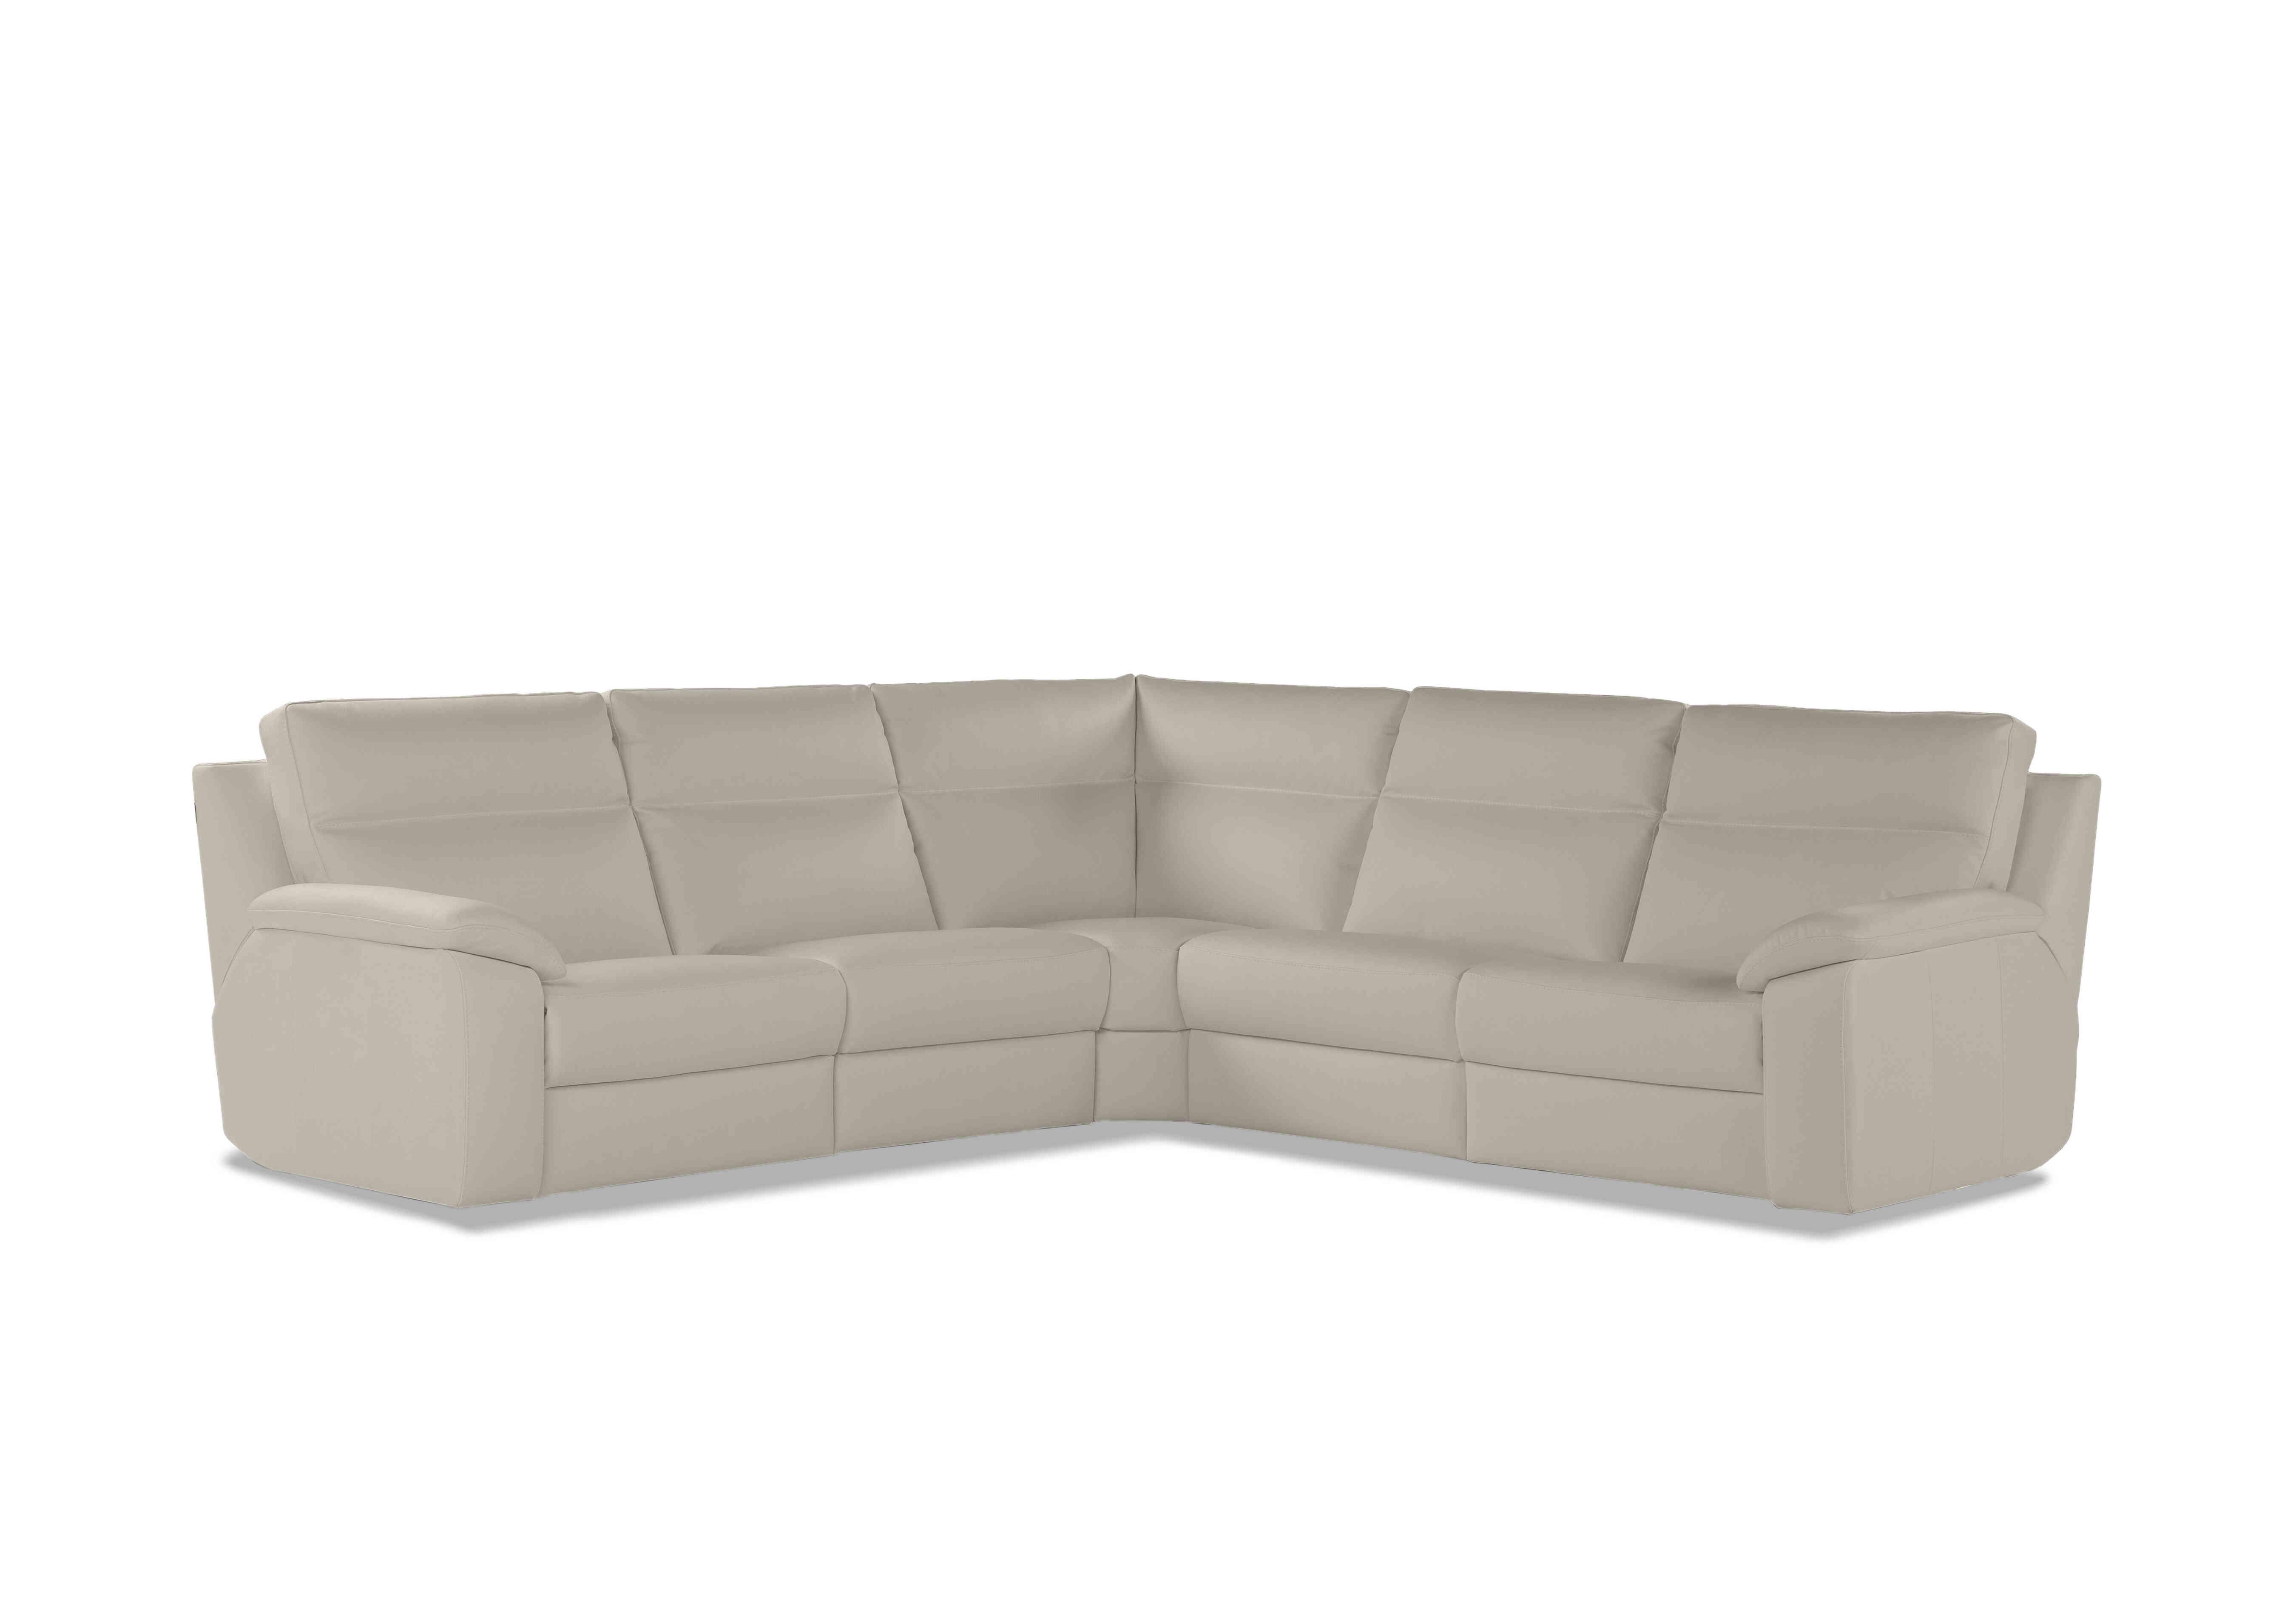 Pepino Large Leather Corner Sofa in Torello 371 Ice on Furniture Village